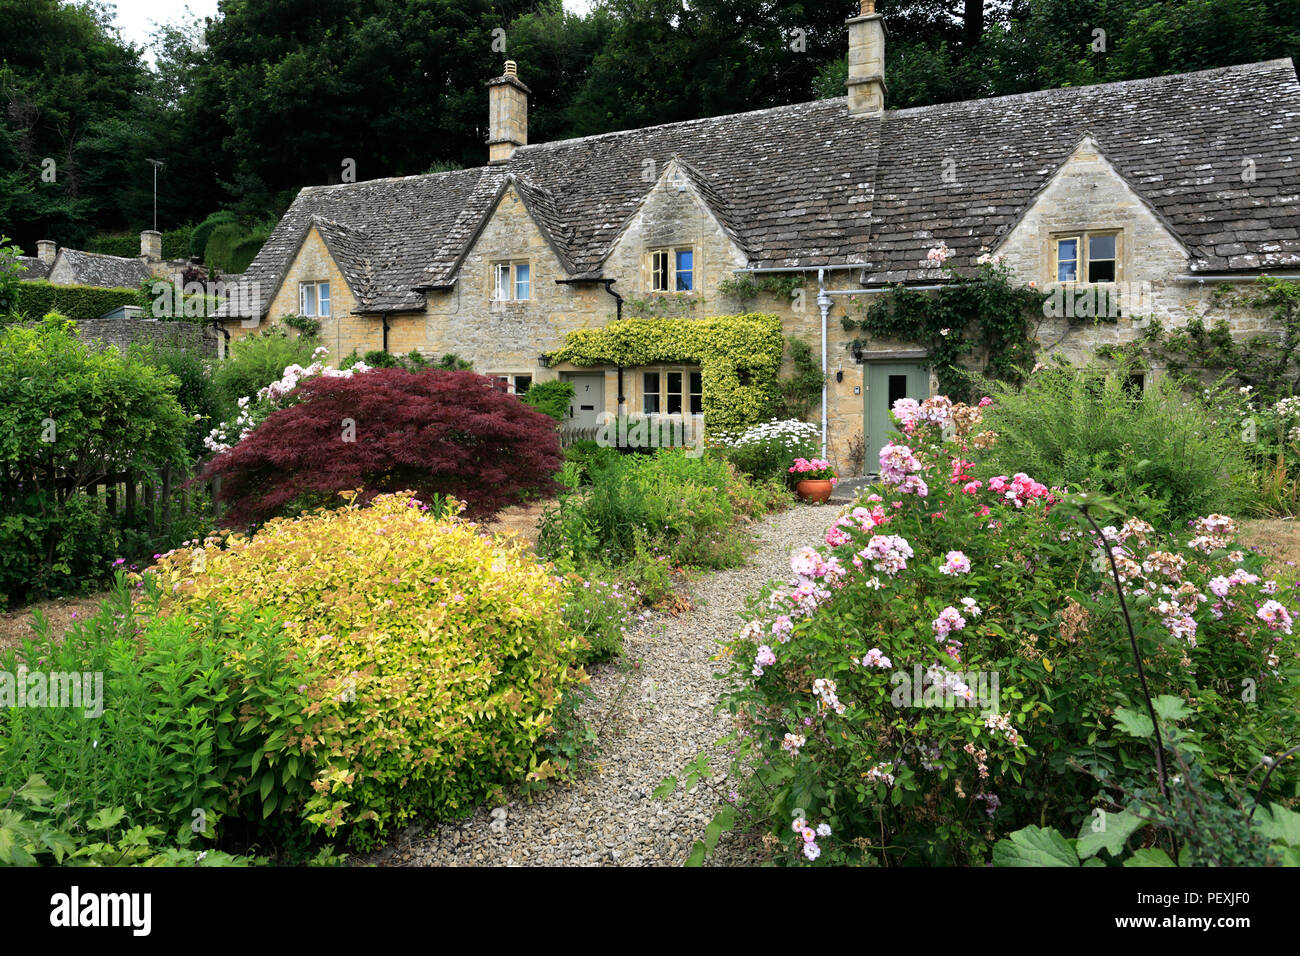 Stone Cottages with colourful gardens at Bibury village, Gloucestershire Cotswolds, England, UK Stock Photo